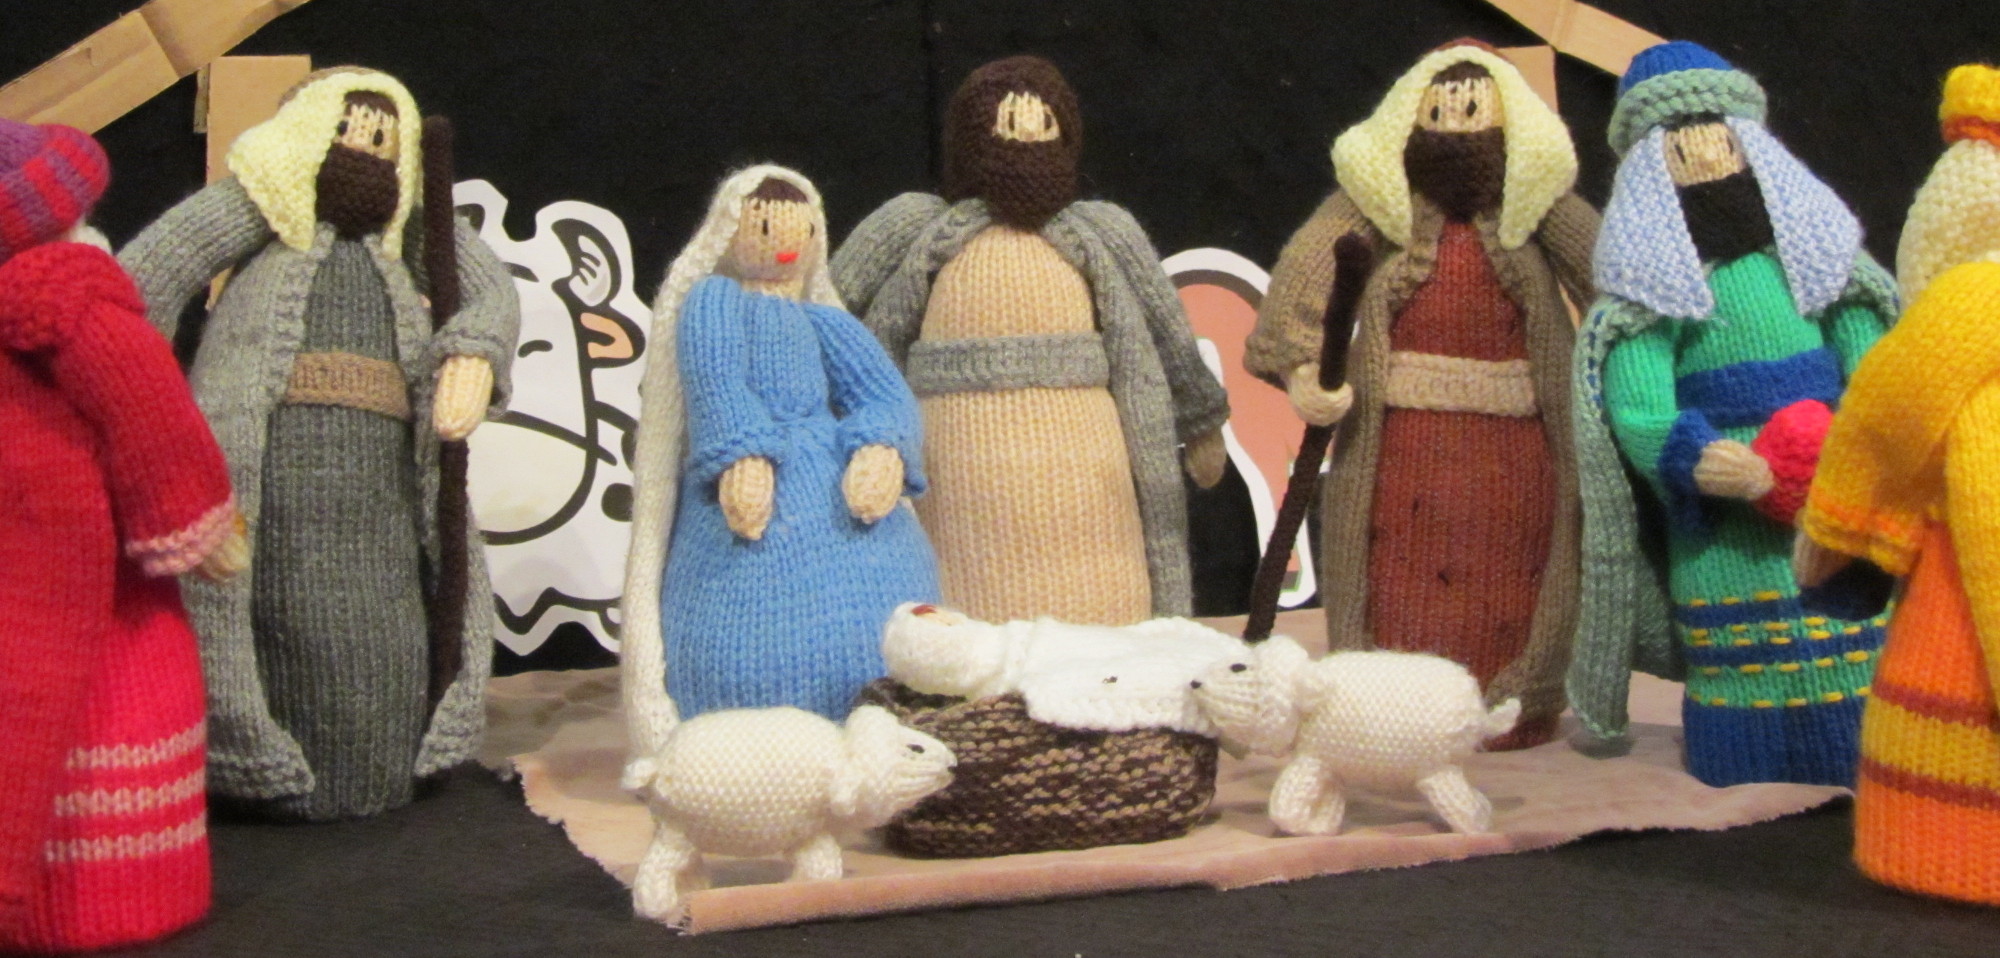 Children’s Toy Shepherd's Crook Staff School Kids Christmas Play Nativity 168cm 